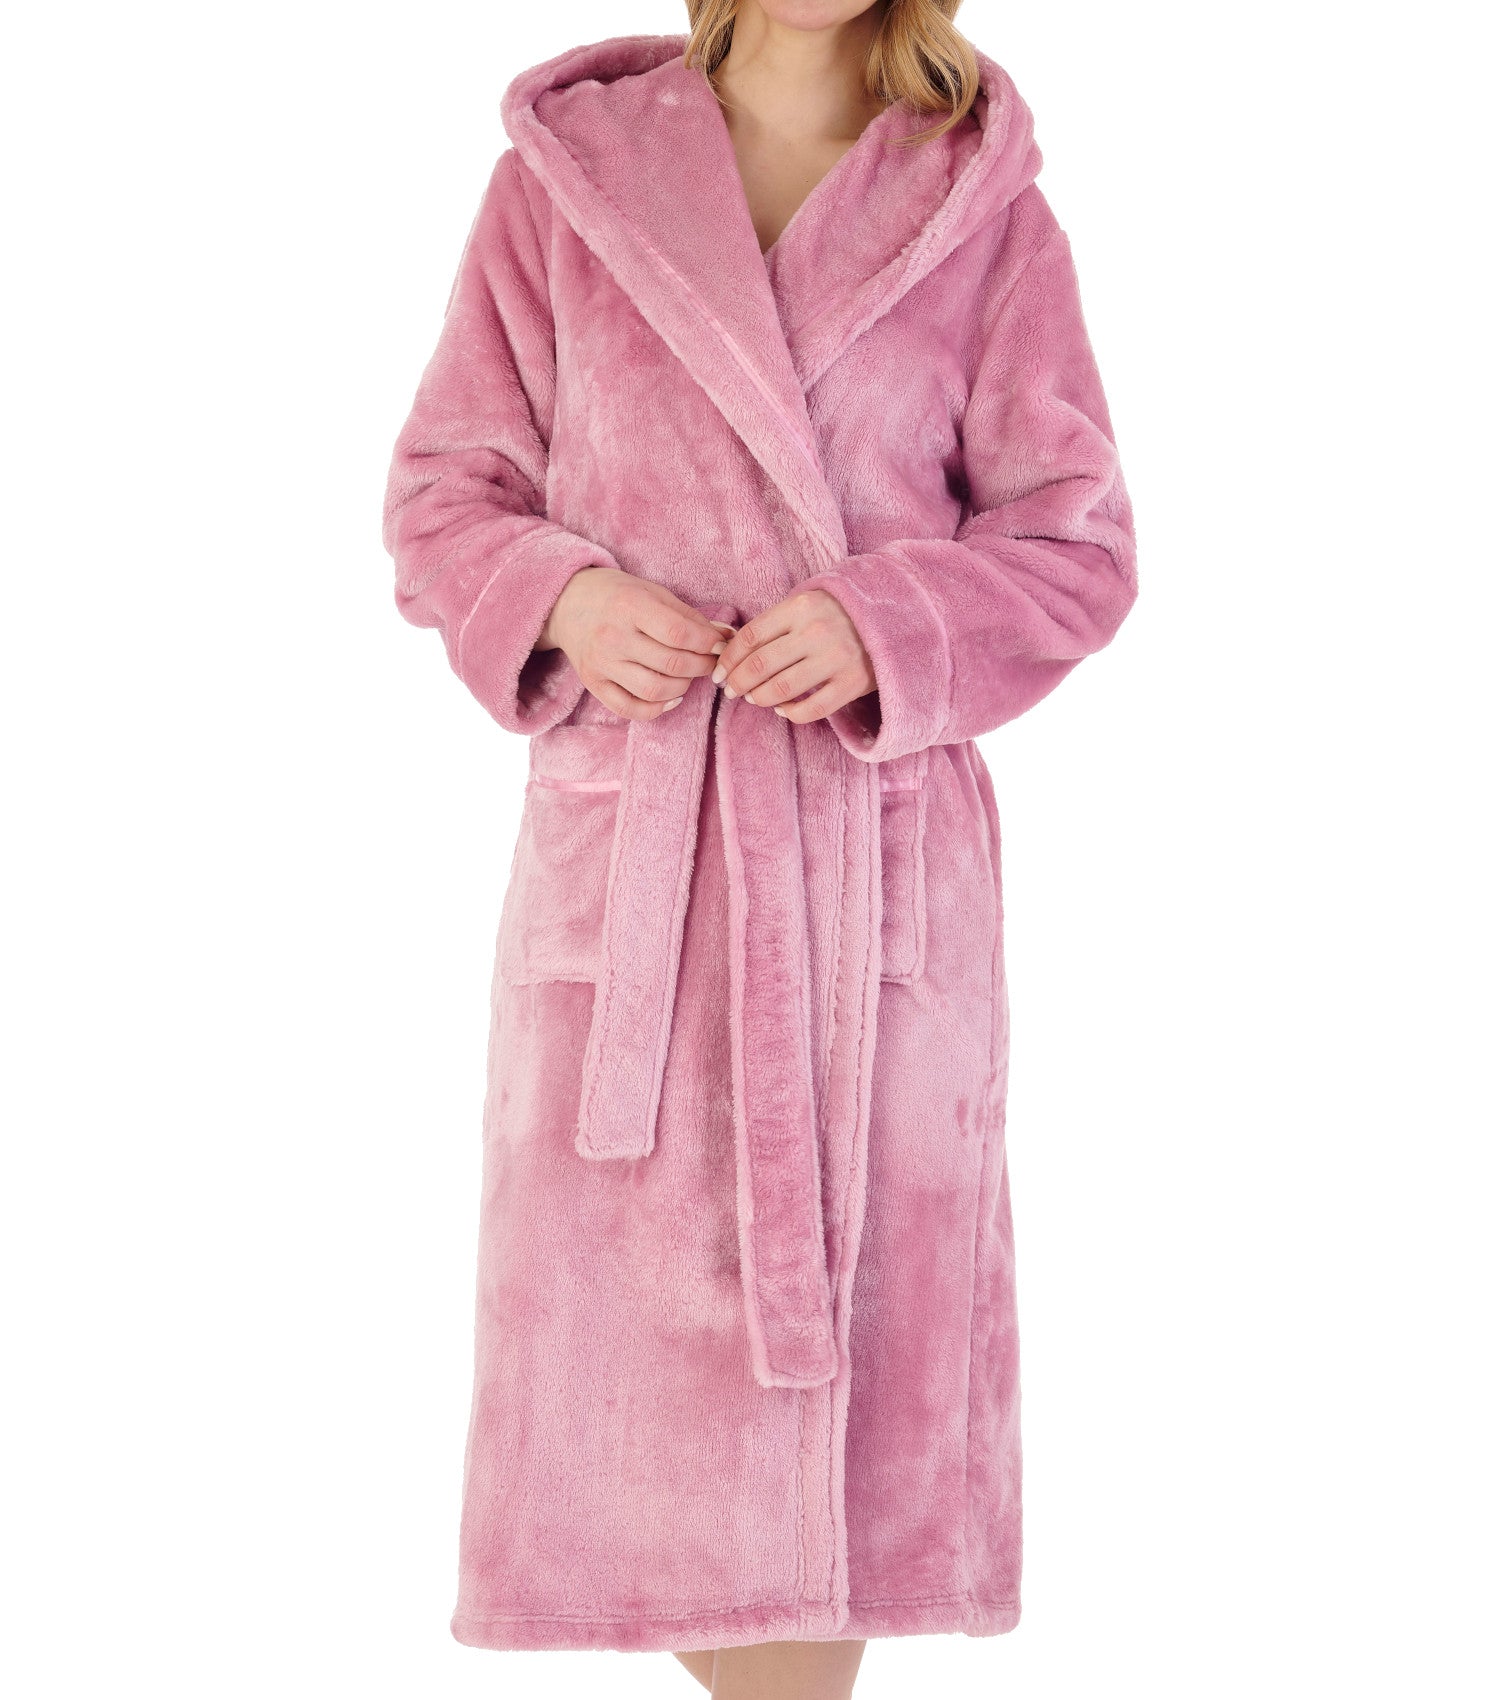 Hot Pink Hooded Royalty Robe, Super Soft Plush Fleece Spa Robe, Housecoat,  Luxury Designer Robe, Gift Idea, Bathrobe - Etsy